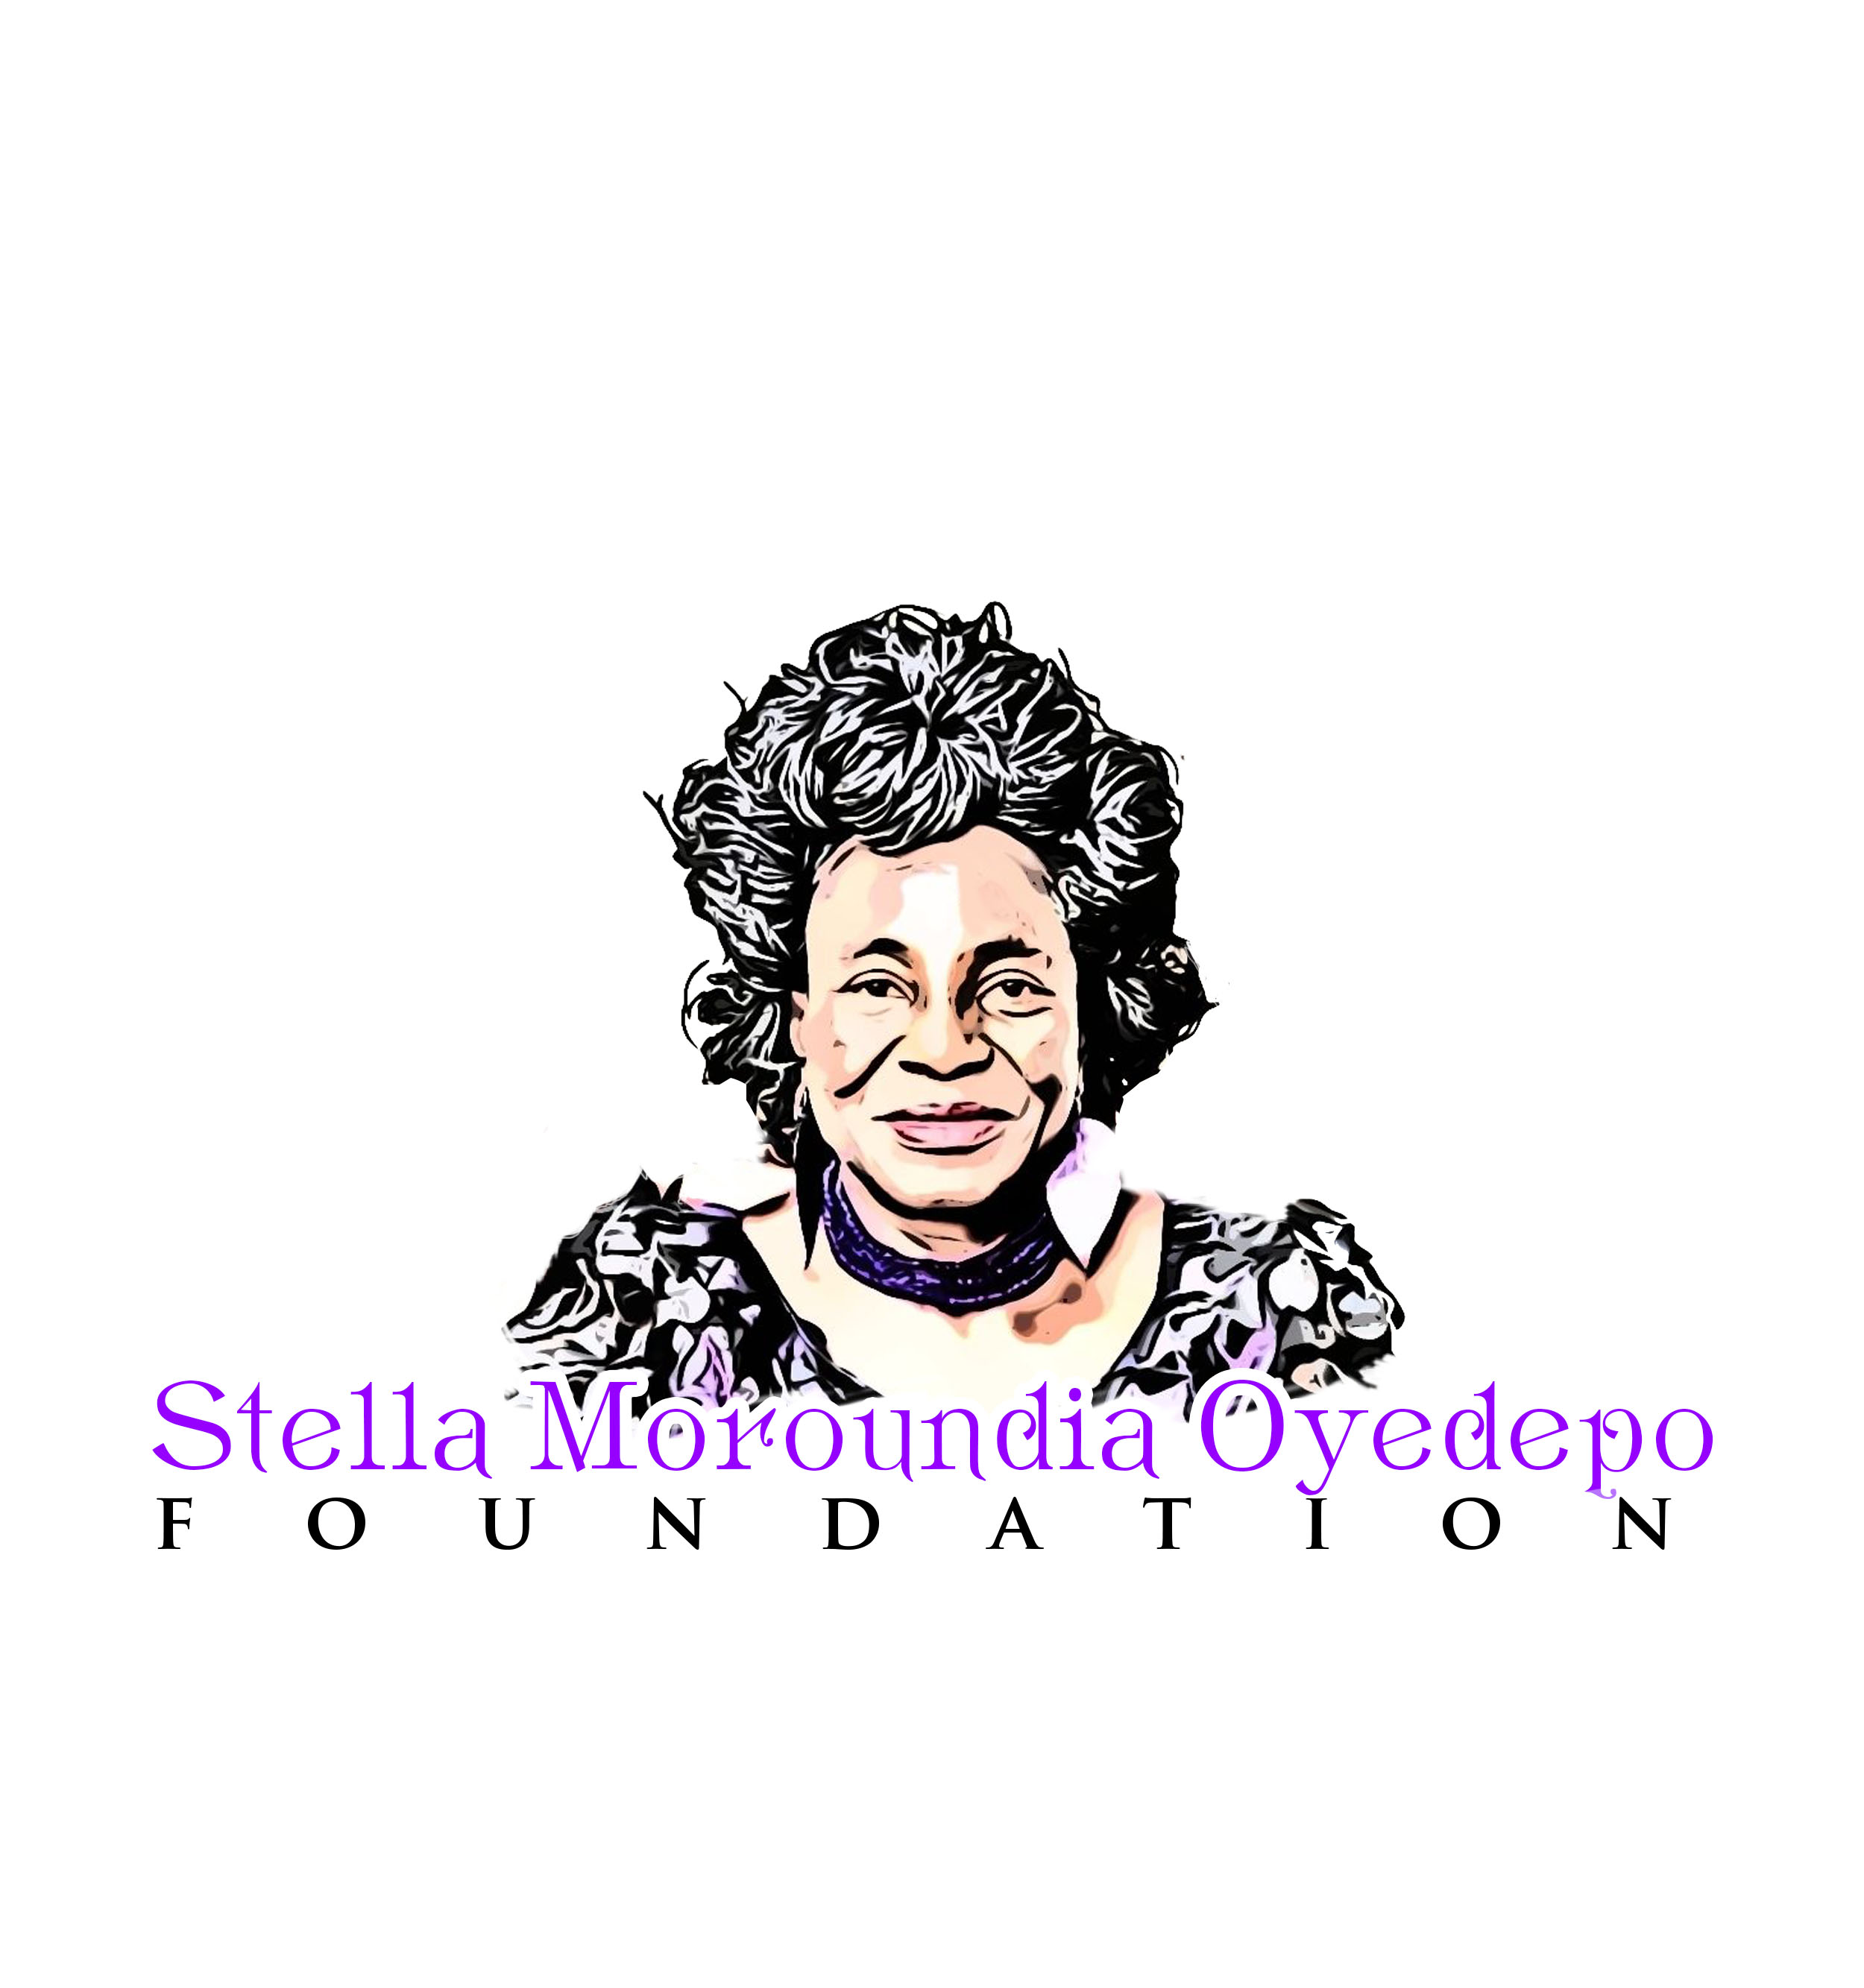 Stella Morundia Oyedepo-The Legacy of Stella Morundia Oyedepo